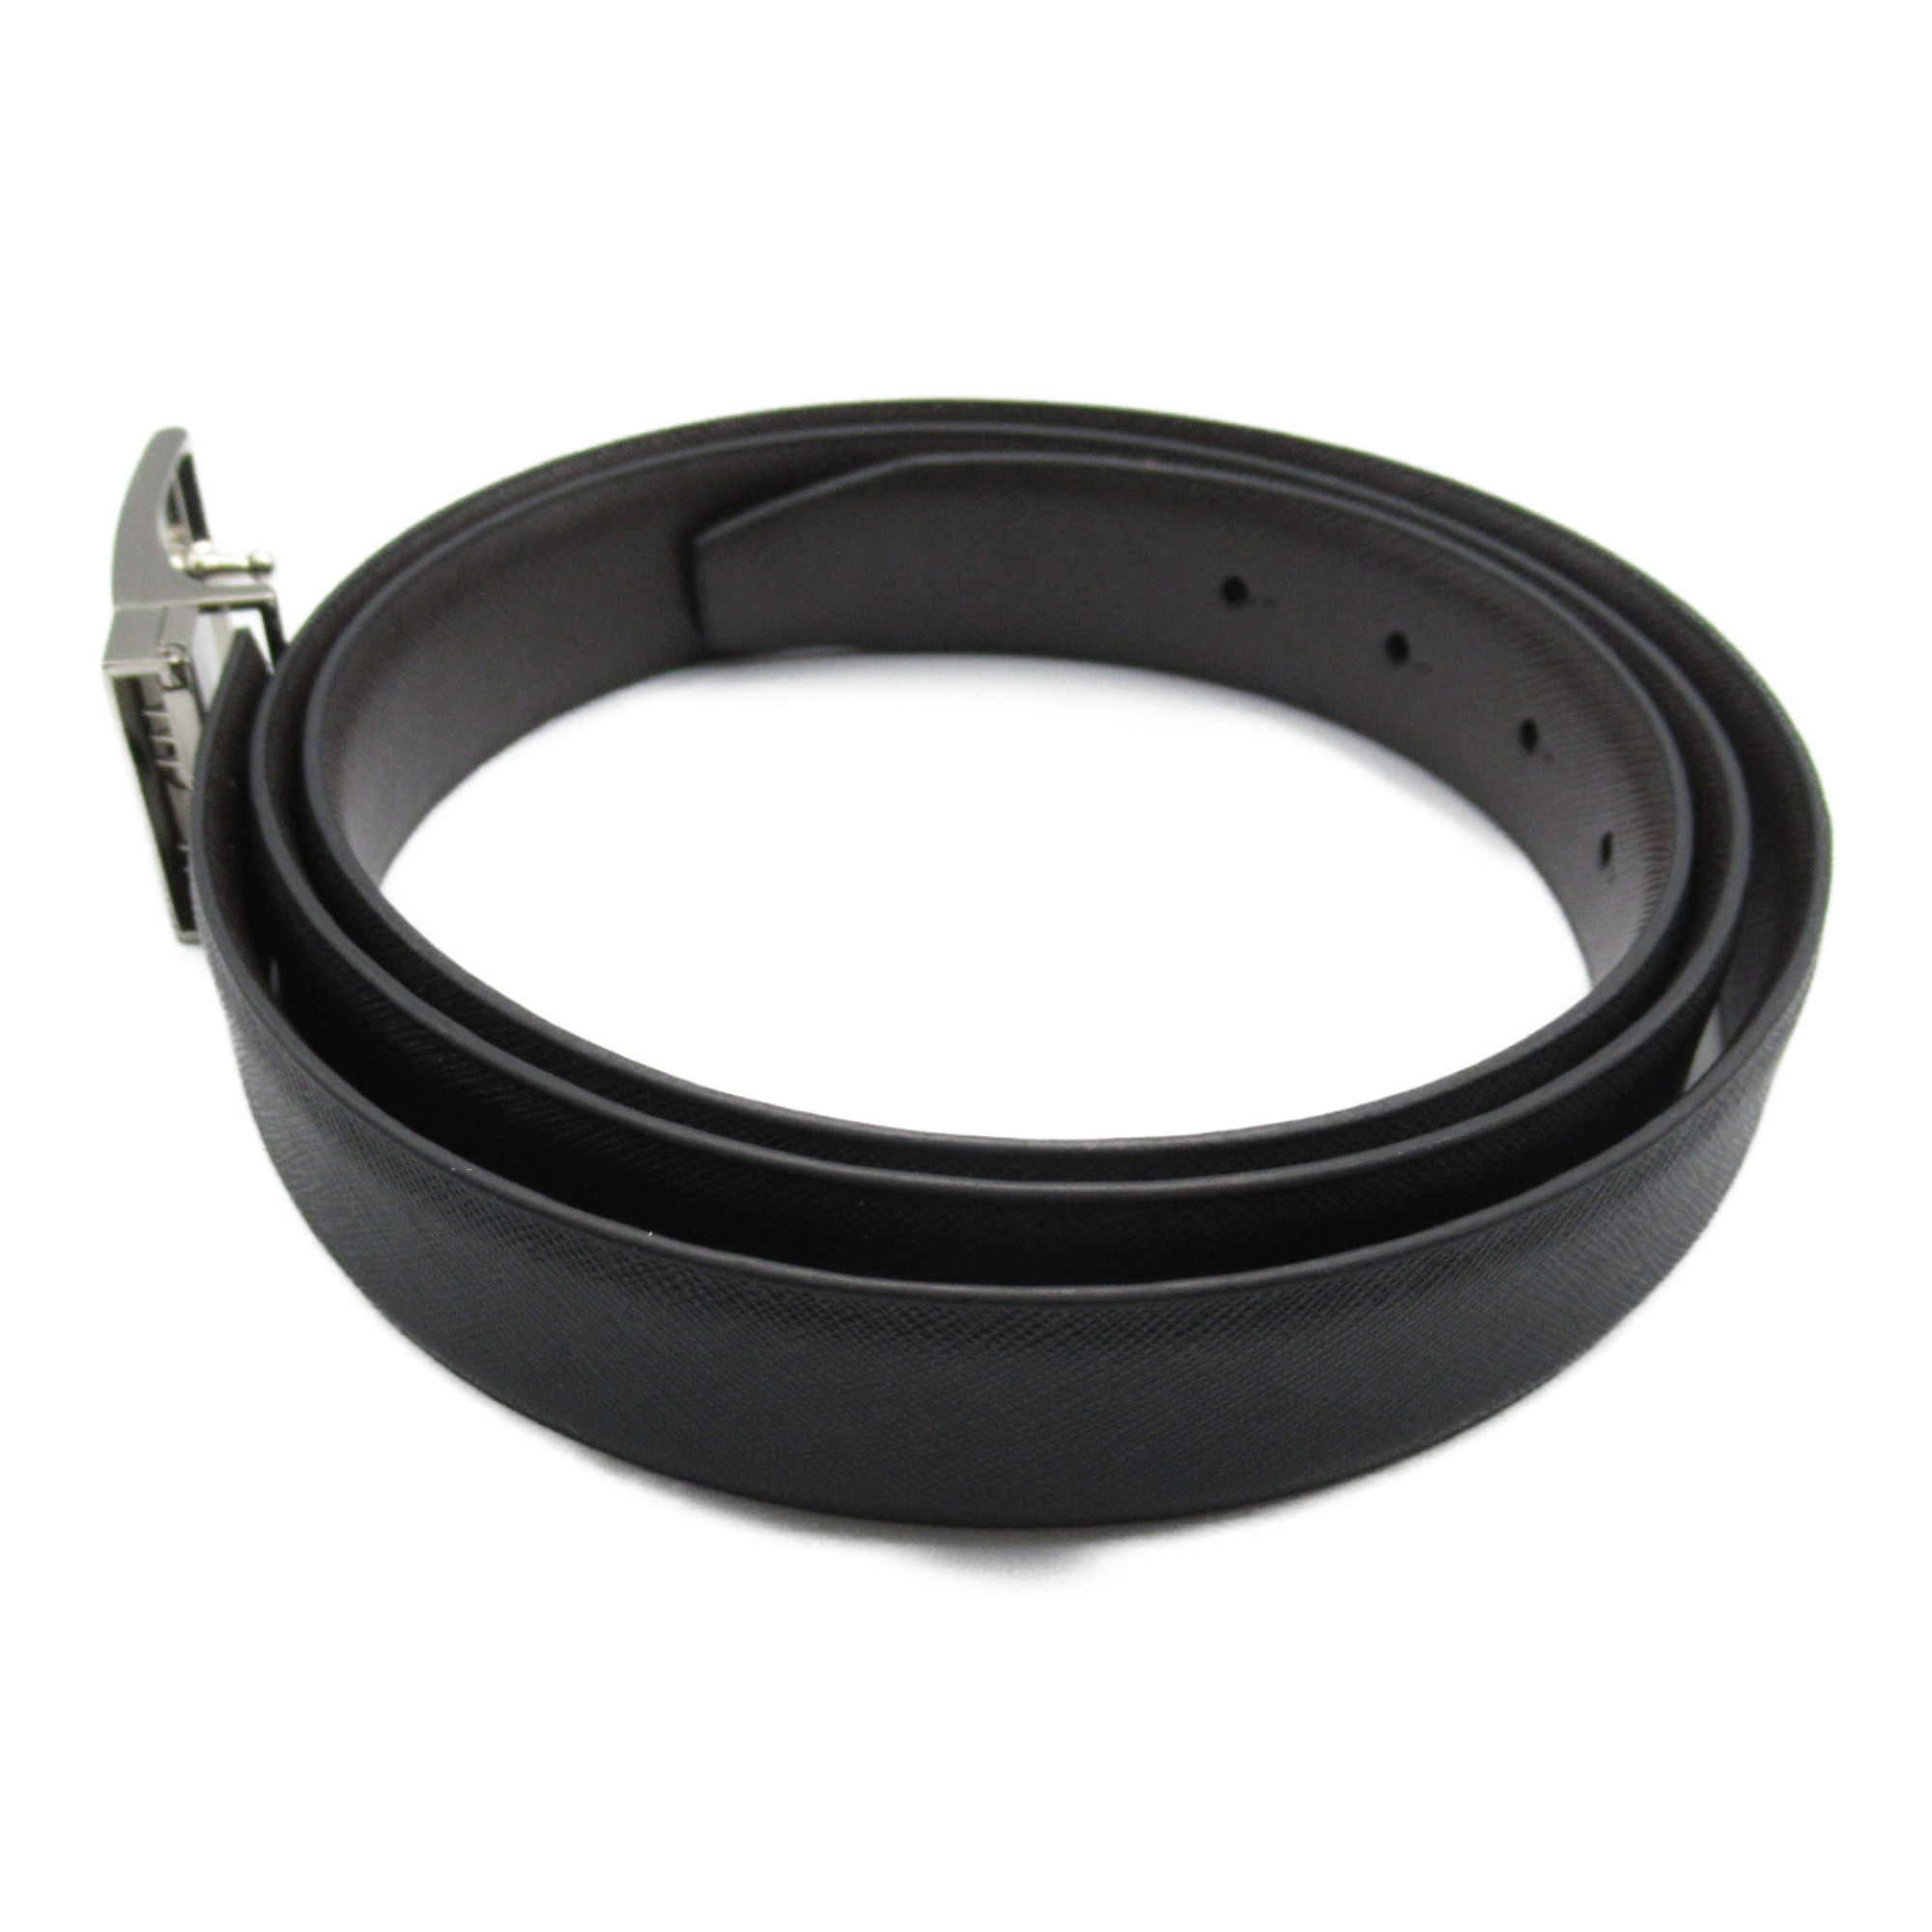 Calvin Klein belt Black leather 20020